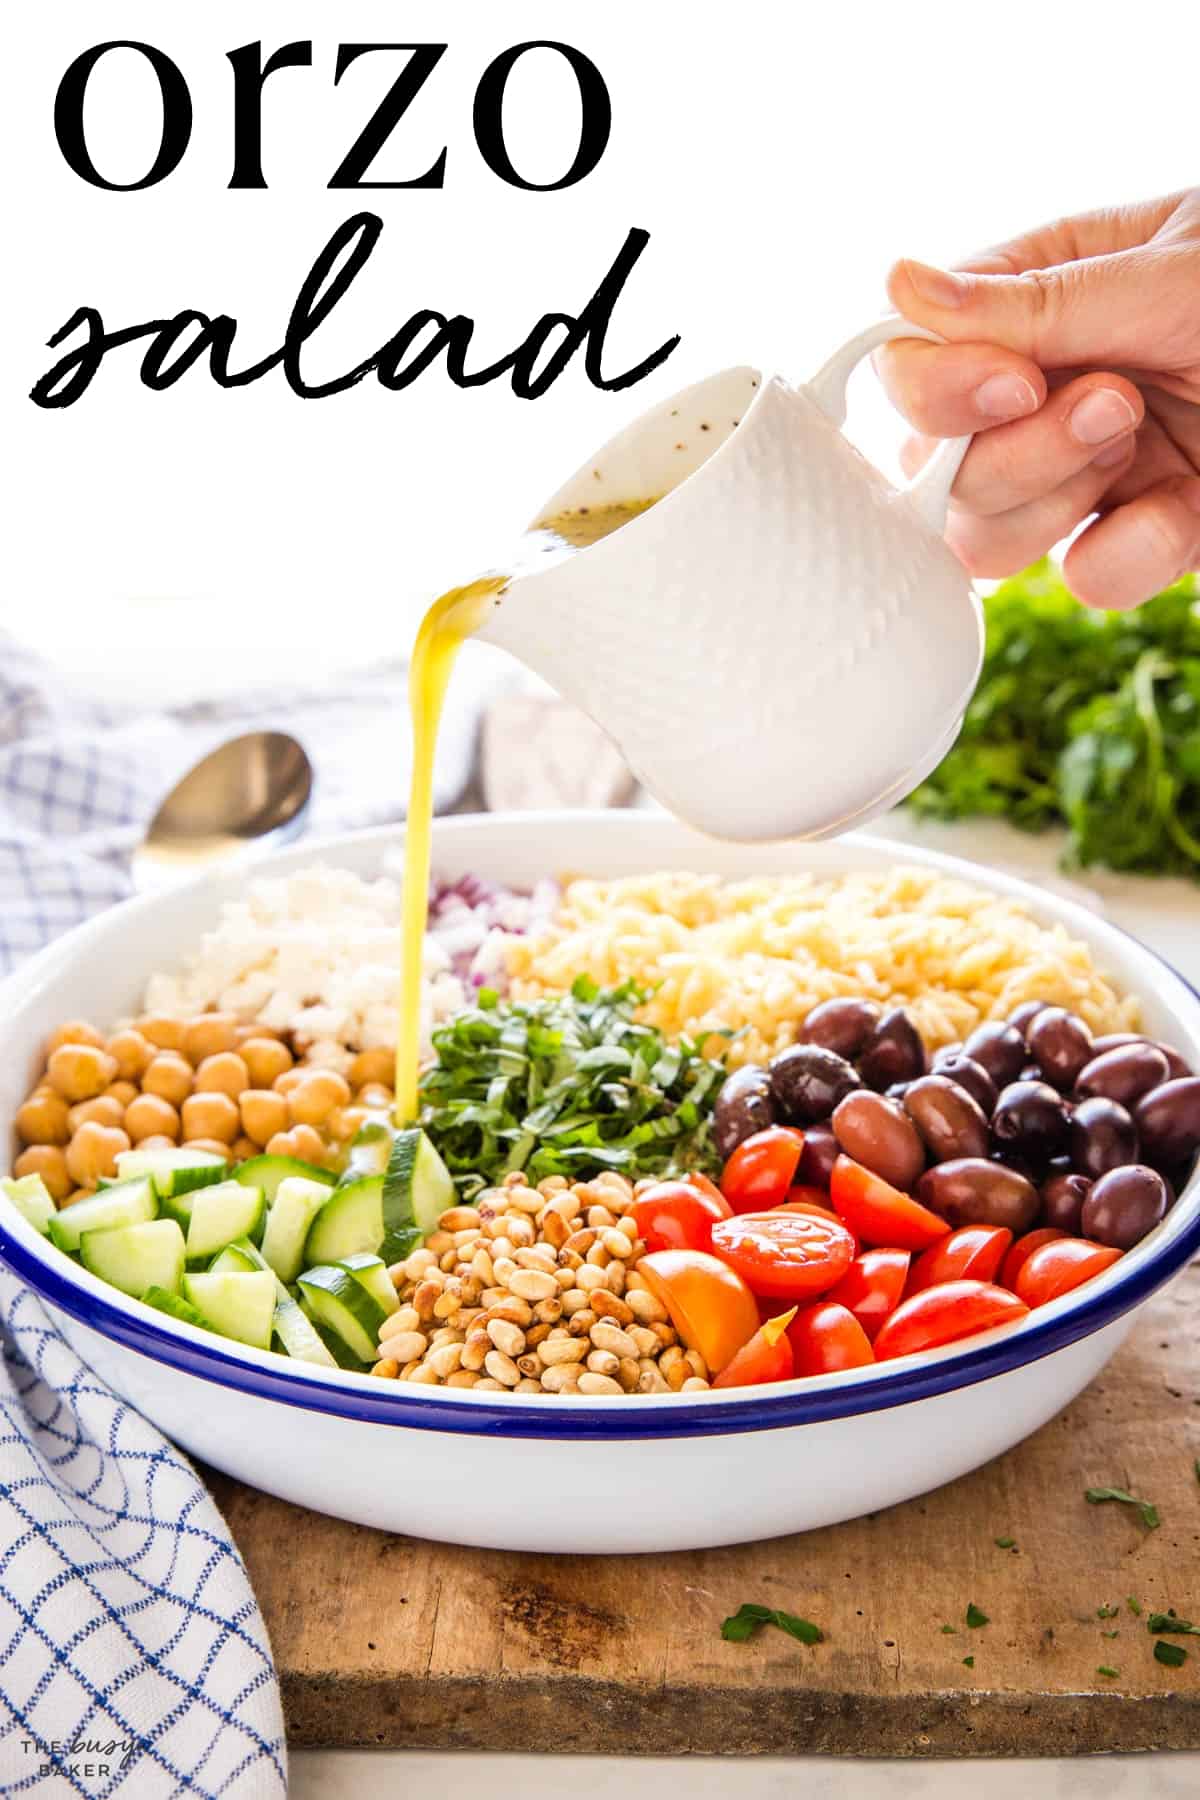 Orzo Salad Recipe